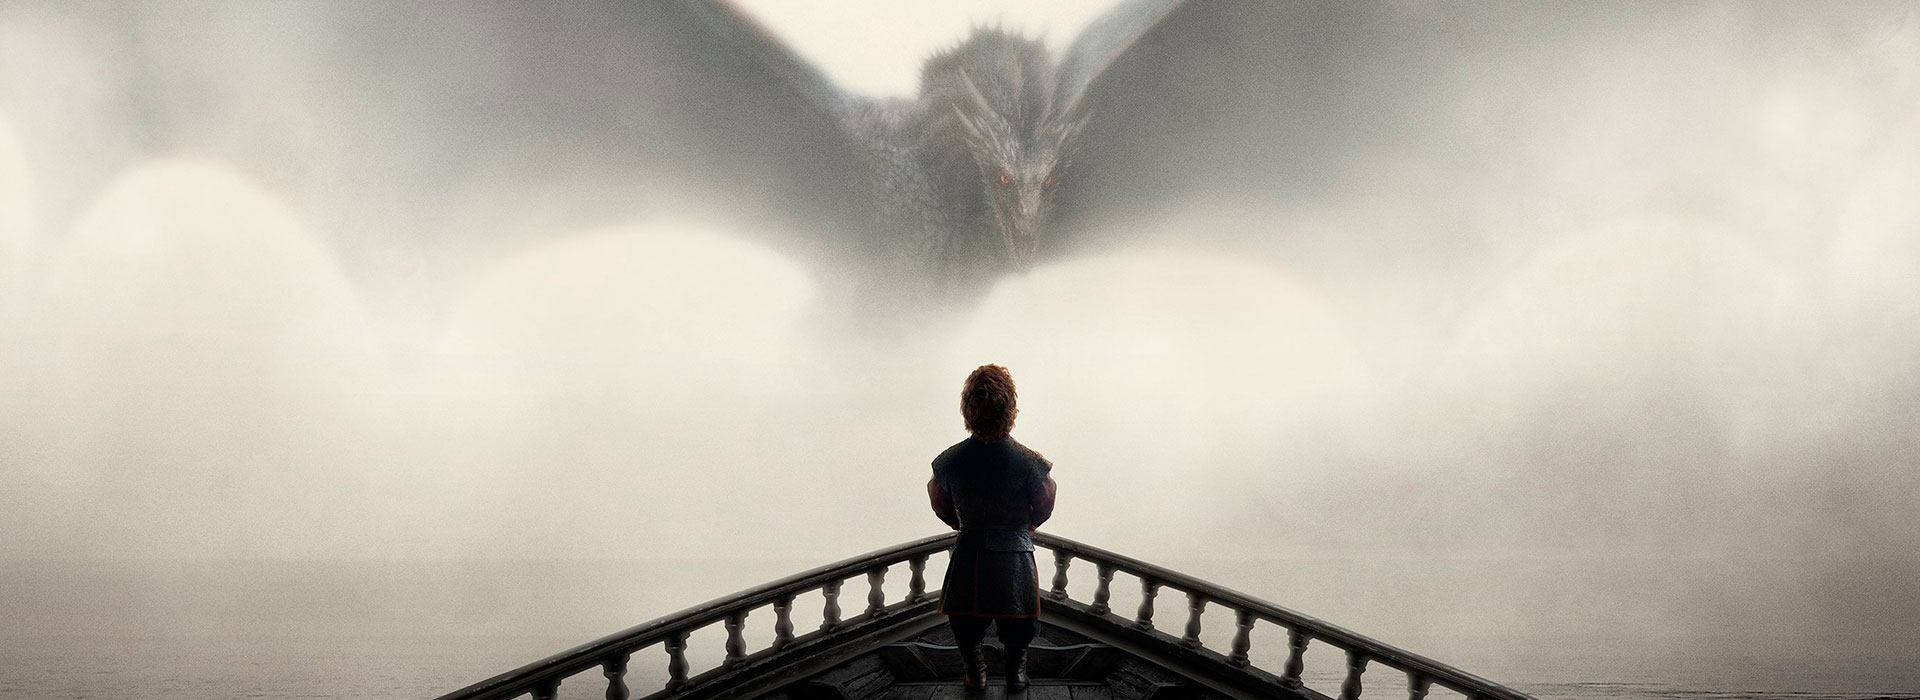 Game Of Thrones Season 8 Tyrion Dragon Background